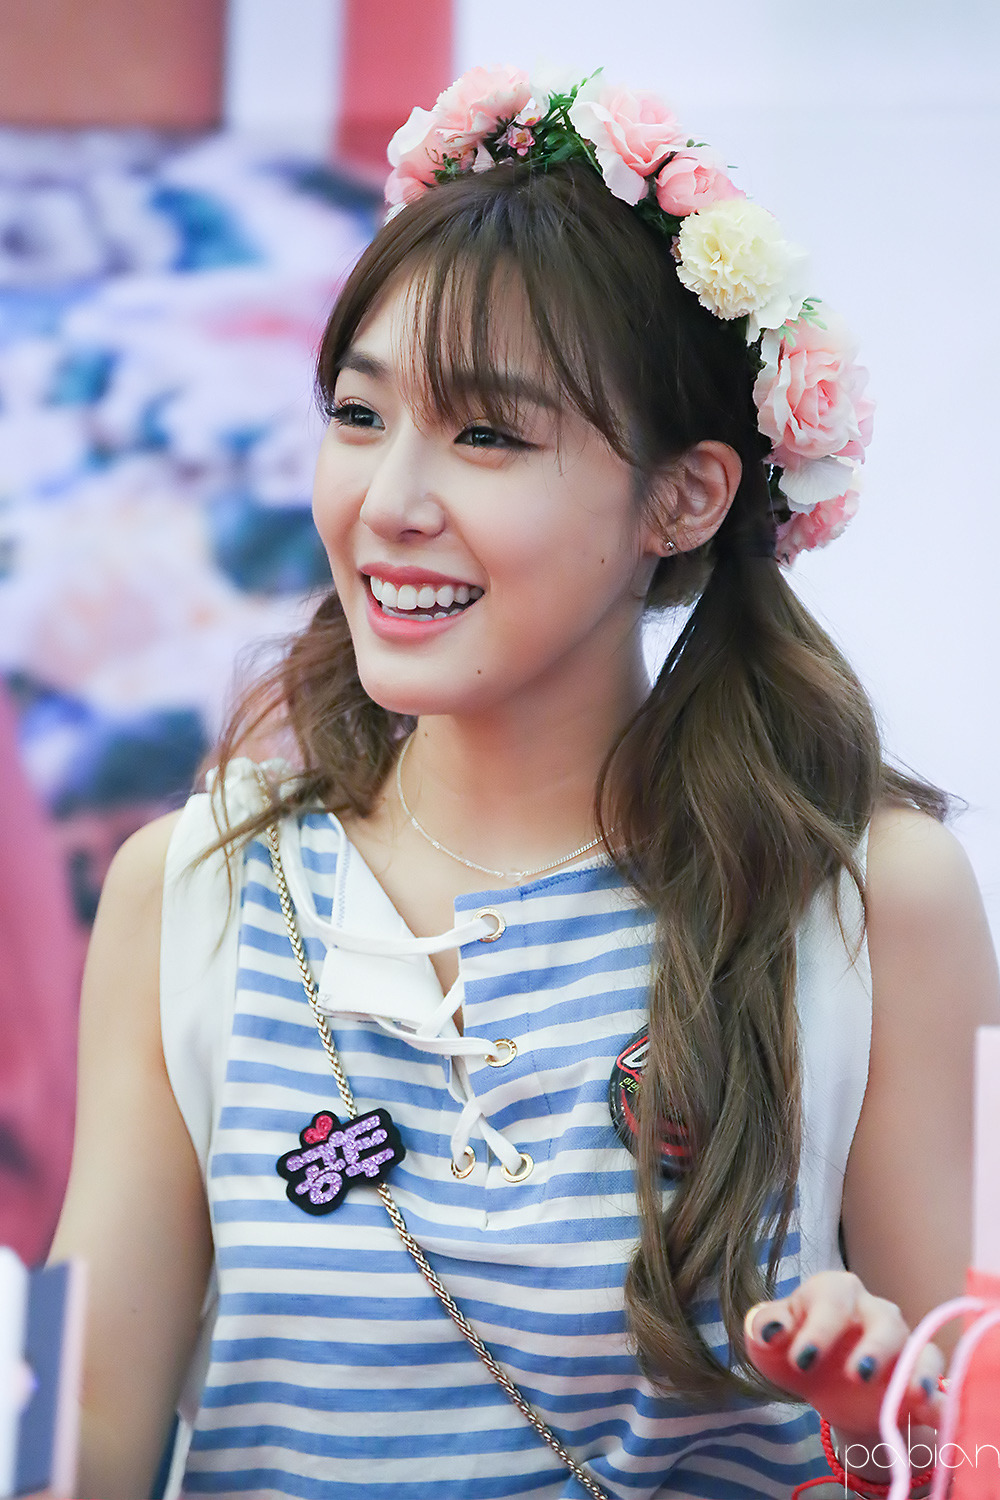 [PIC][06-06-2016]Tiffany tham dự buổi Fansign cho "I Just Wanna Dance" tại Busan vào chiều nay - Page 3 2542ED4E5756C3E30CEA4C